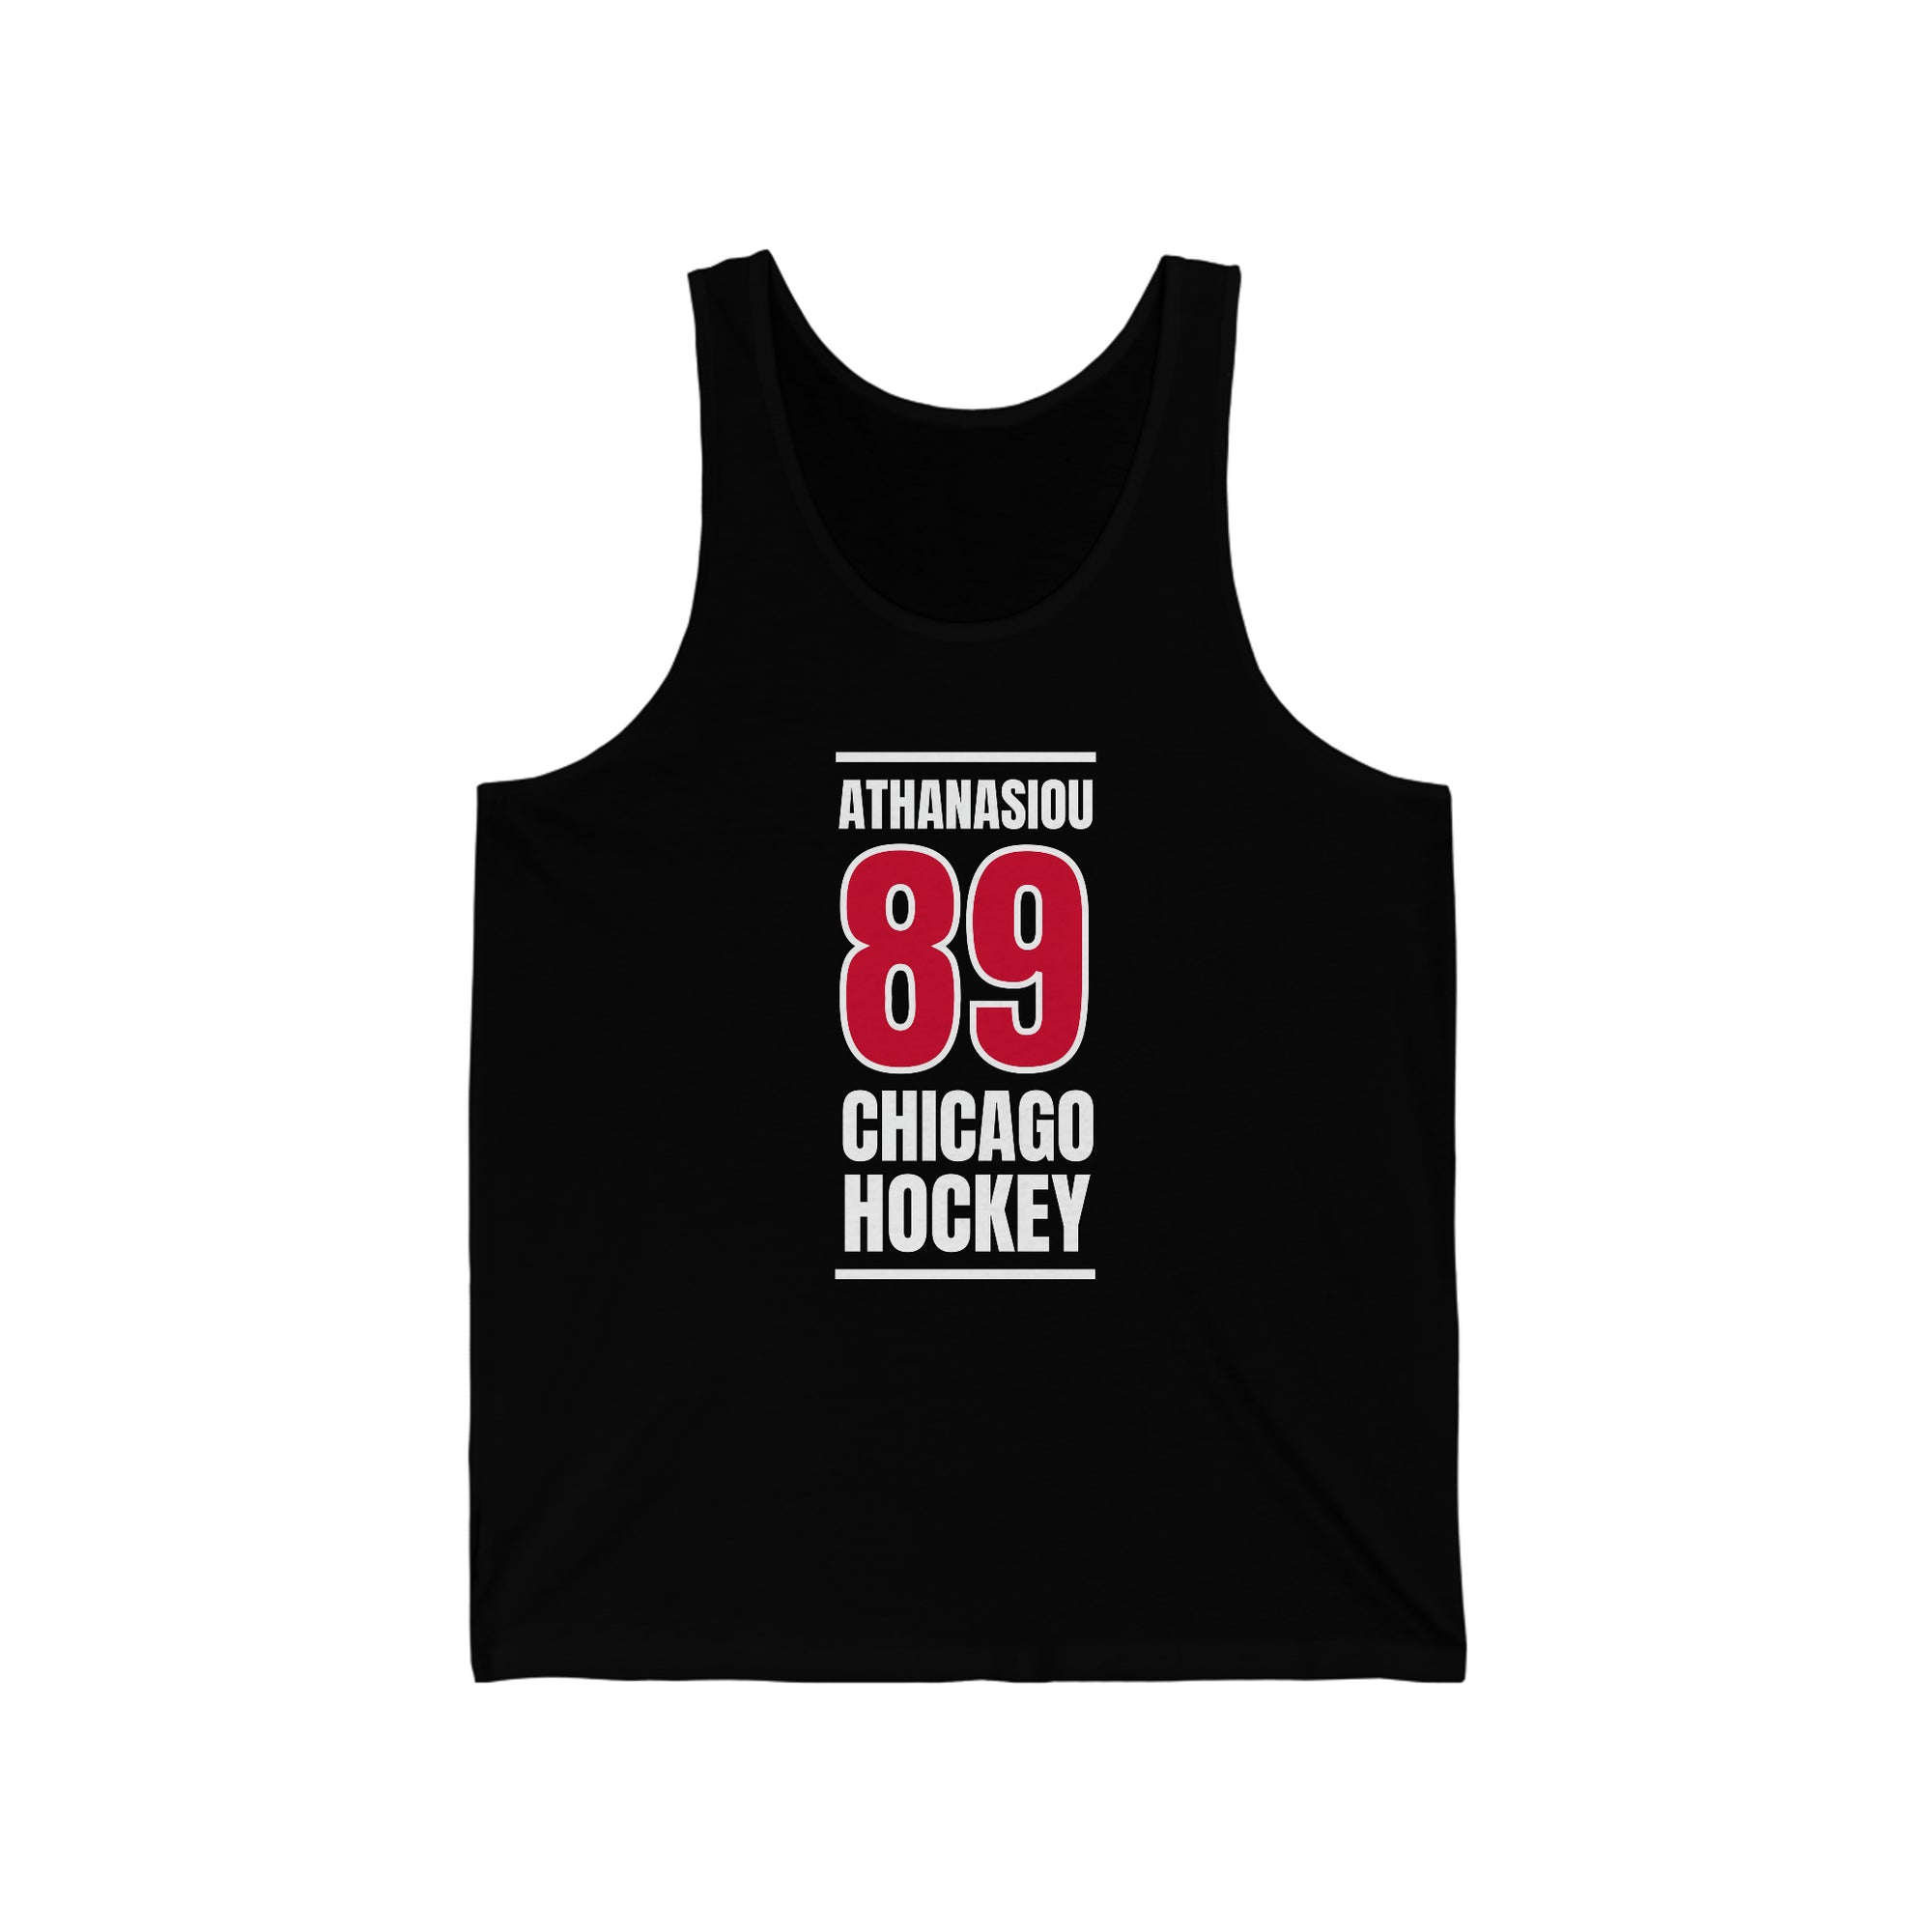 Athanasiou 89 Chicago Hockey Red Vertical Design Unisex Jersey Tank Top